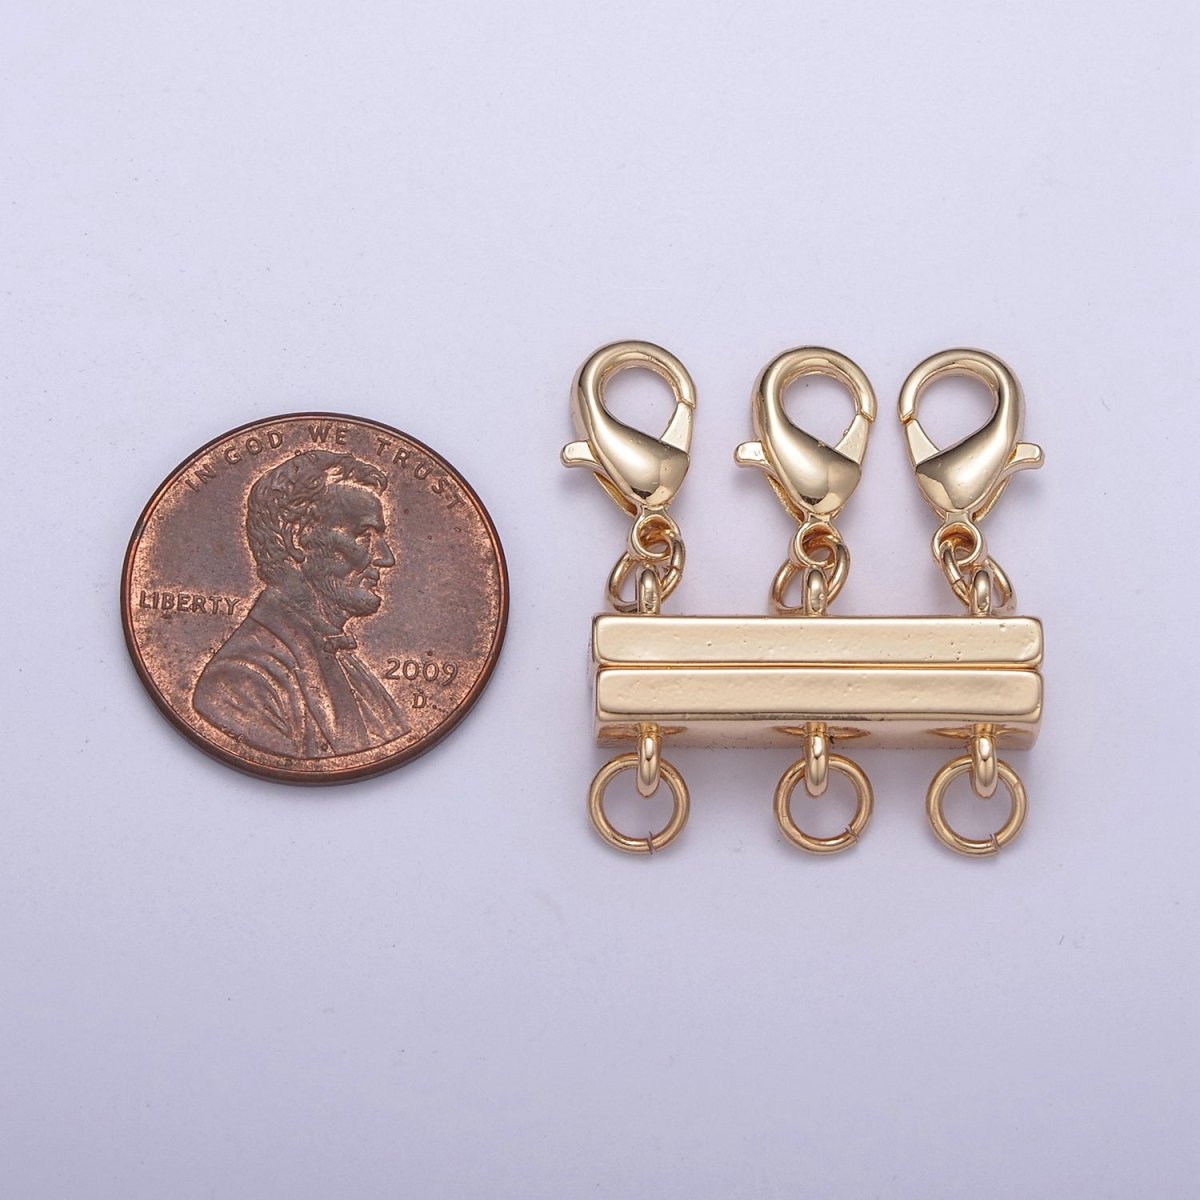 New Gold Magnetic Necklace Detangler, Multiple Strand Chain Necklace / Bracelet for Layering Stackable L-576~L-579 L-724 - DLUXCA